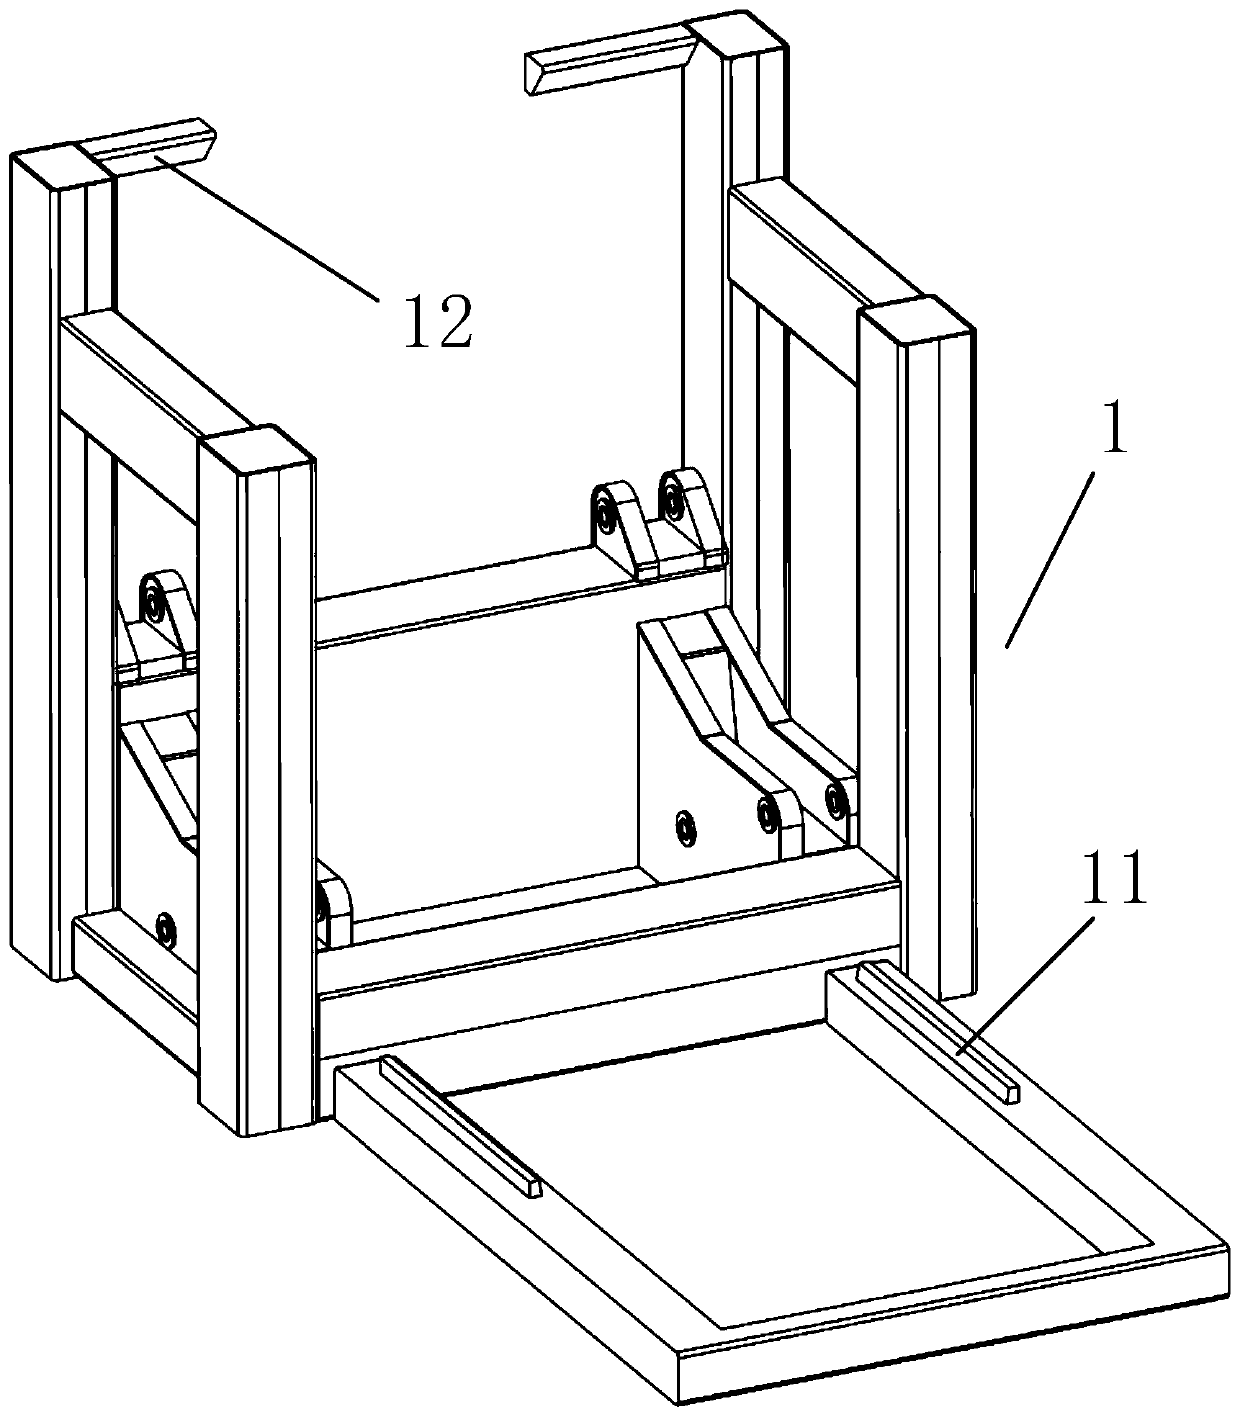 Automatic lifting locking mechanism